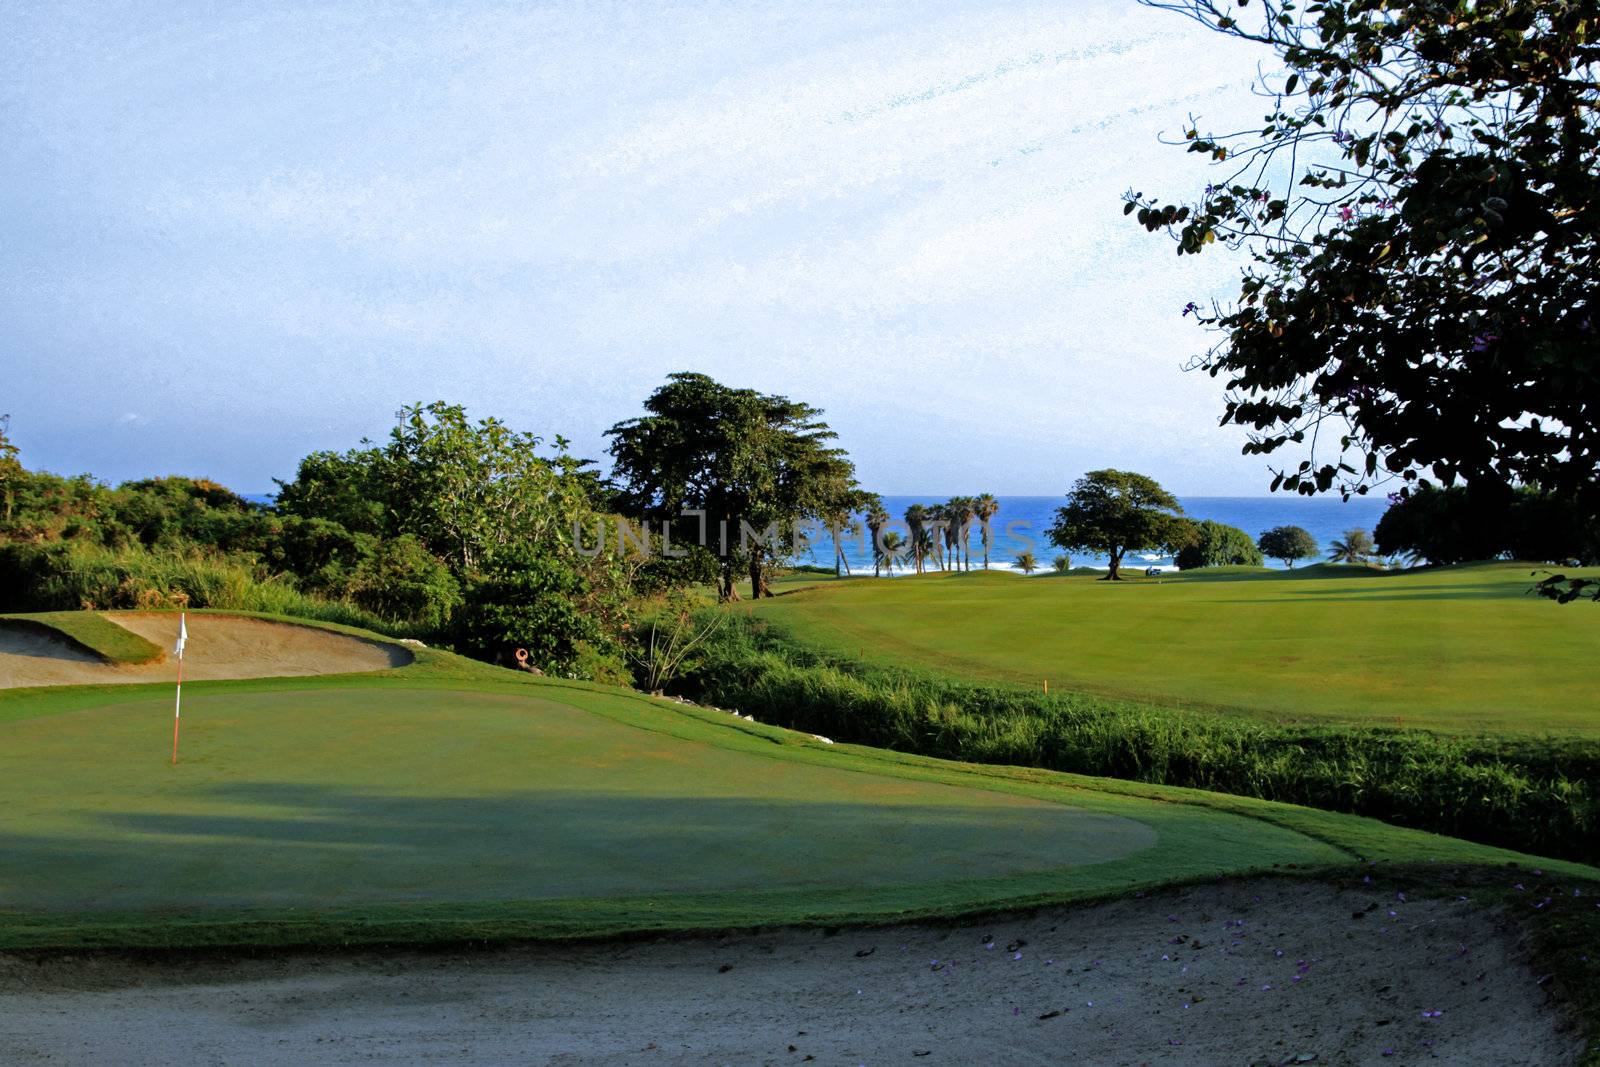 Ocean side golf course 34 by dbriyul